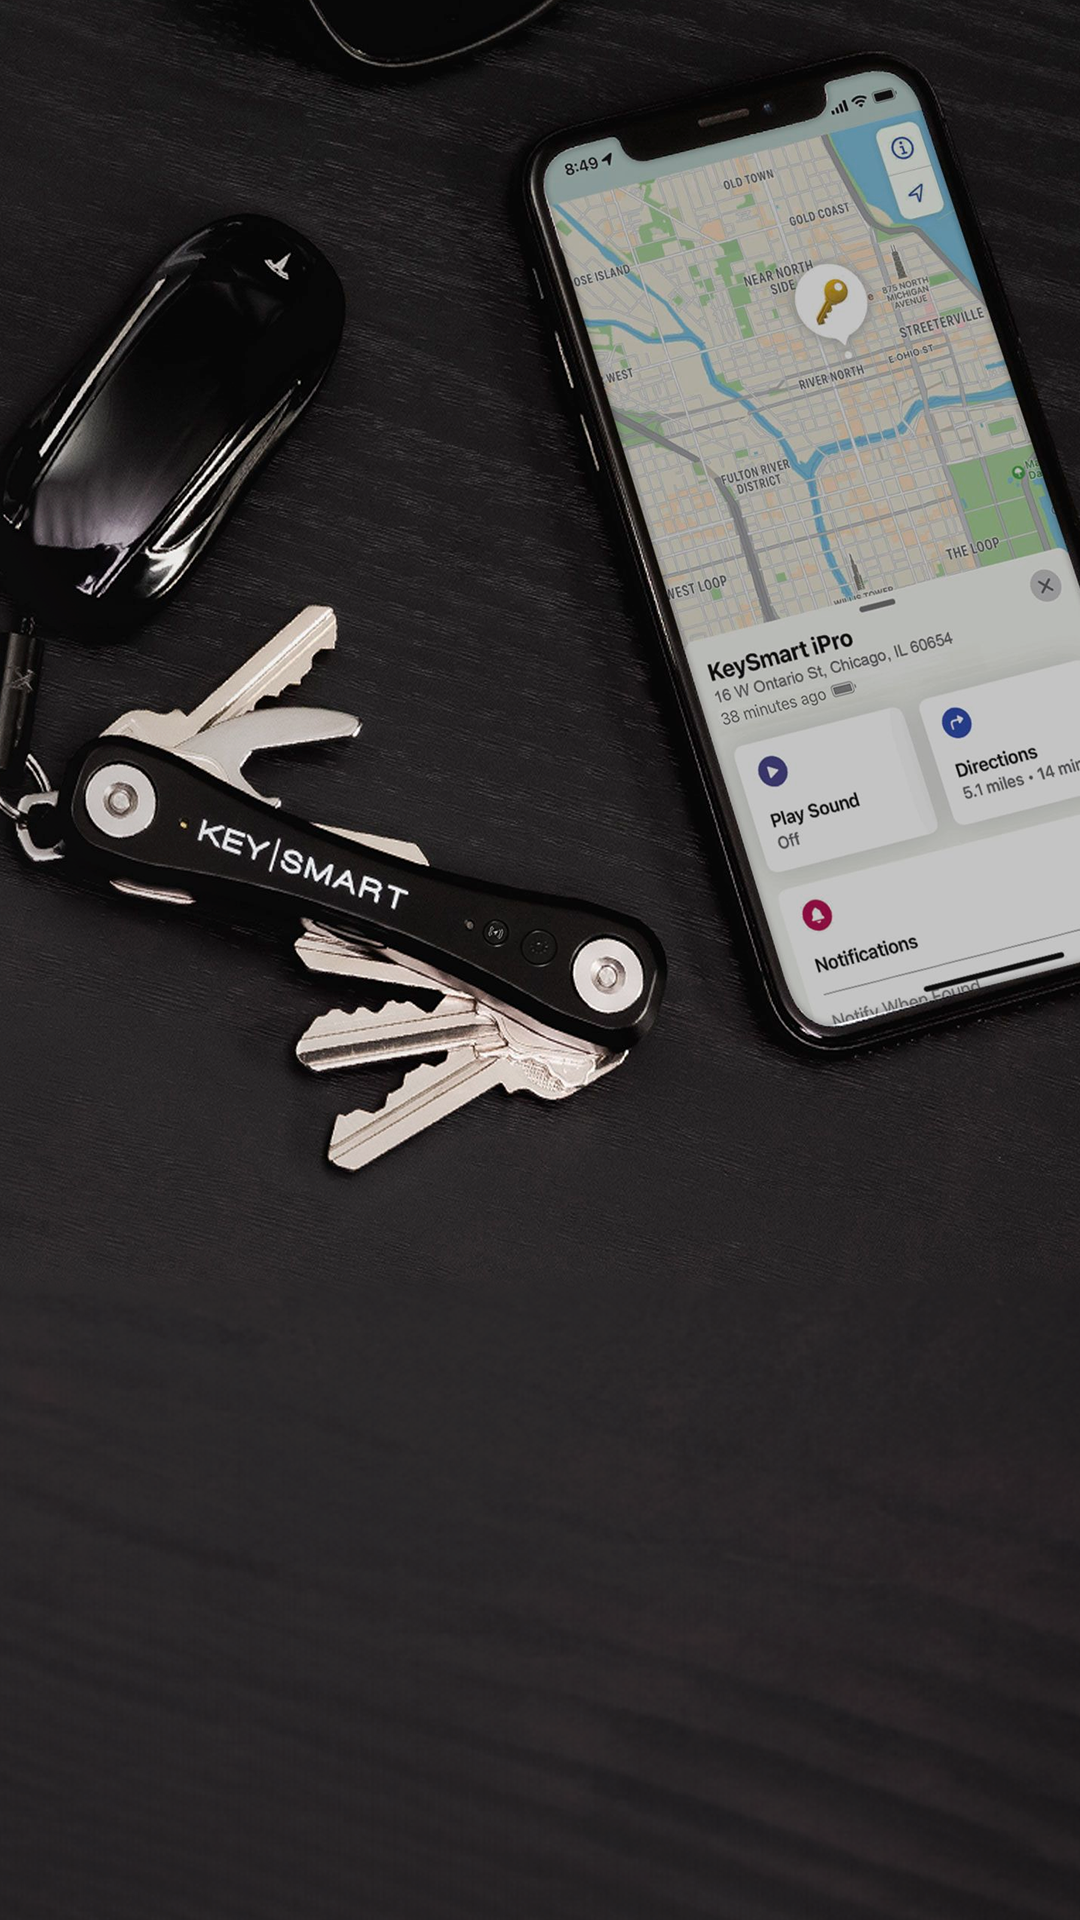 Key E-Z: 3-Way Key Ring & Clip Kit